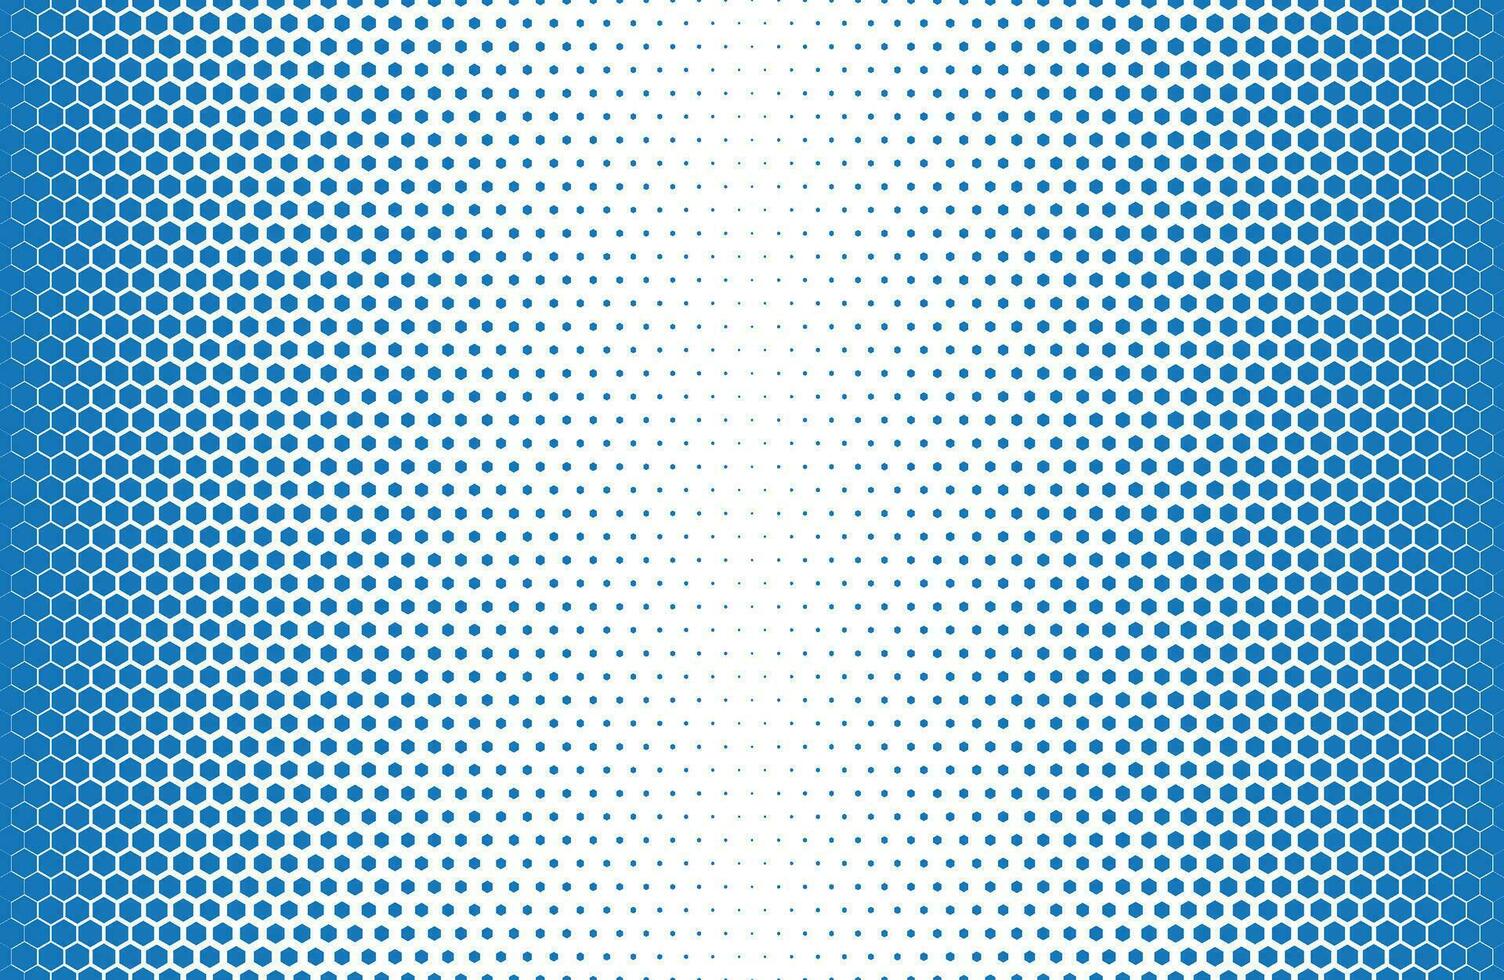 Hexagonal blue halftone pattern vector